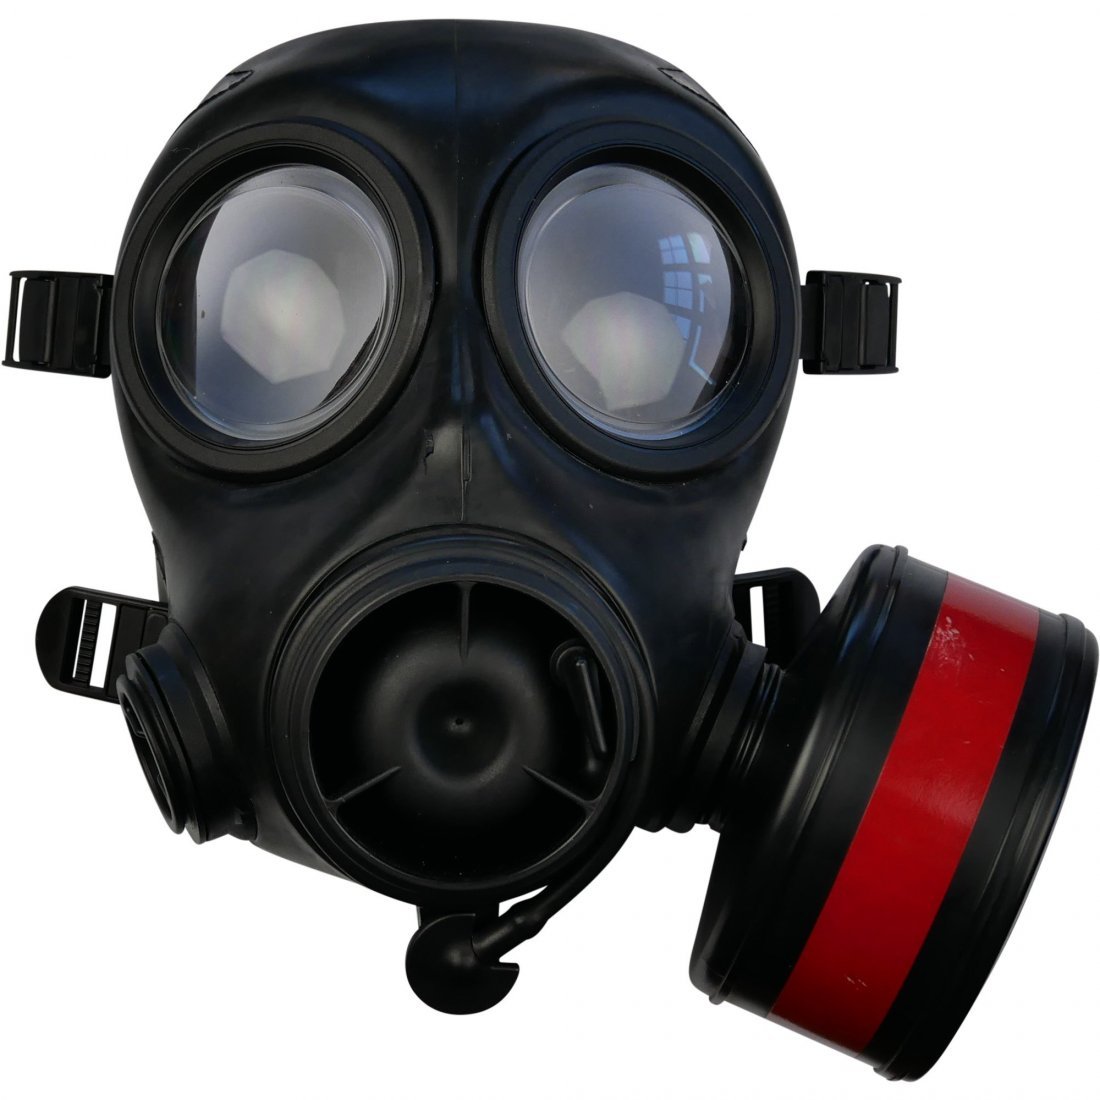 avon gas mask company